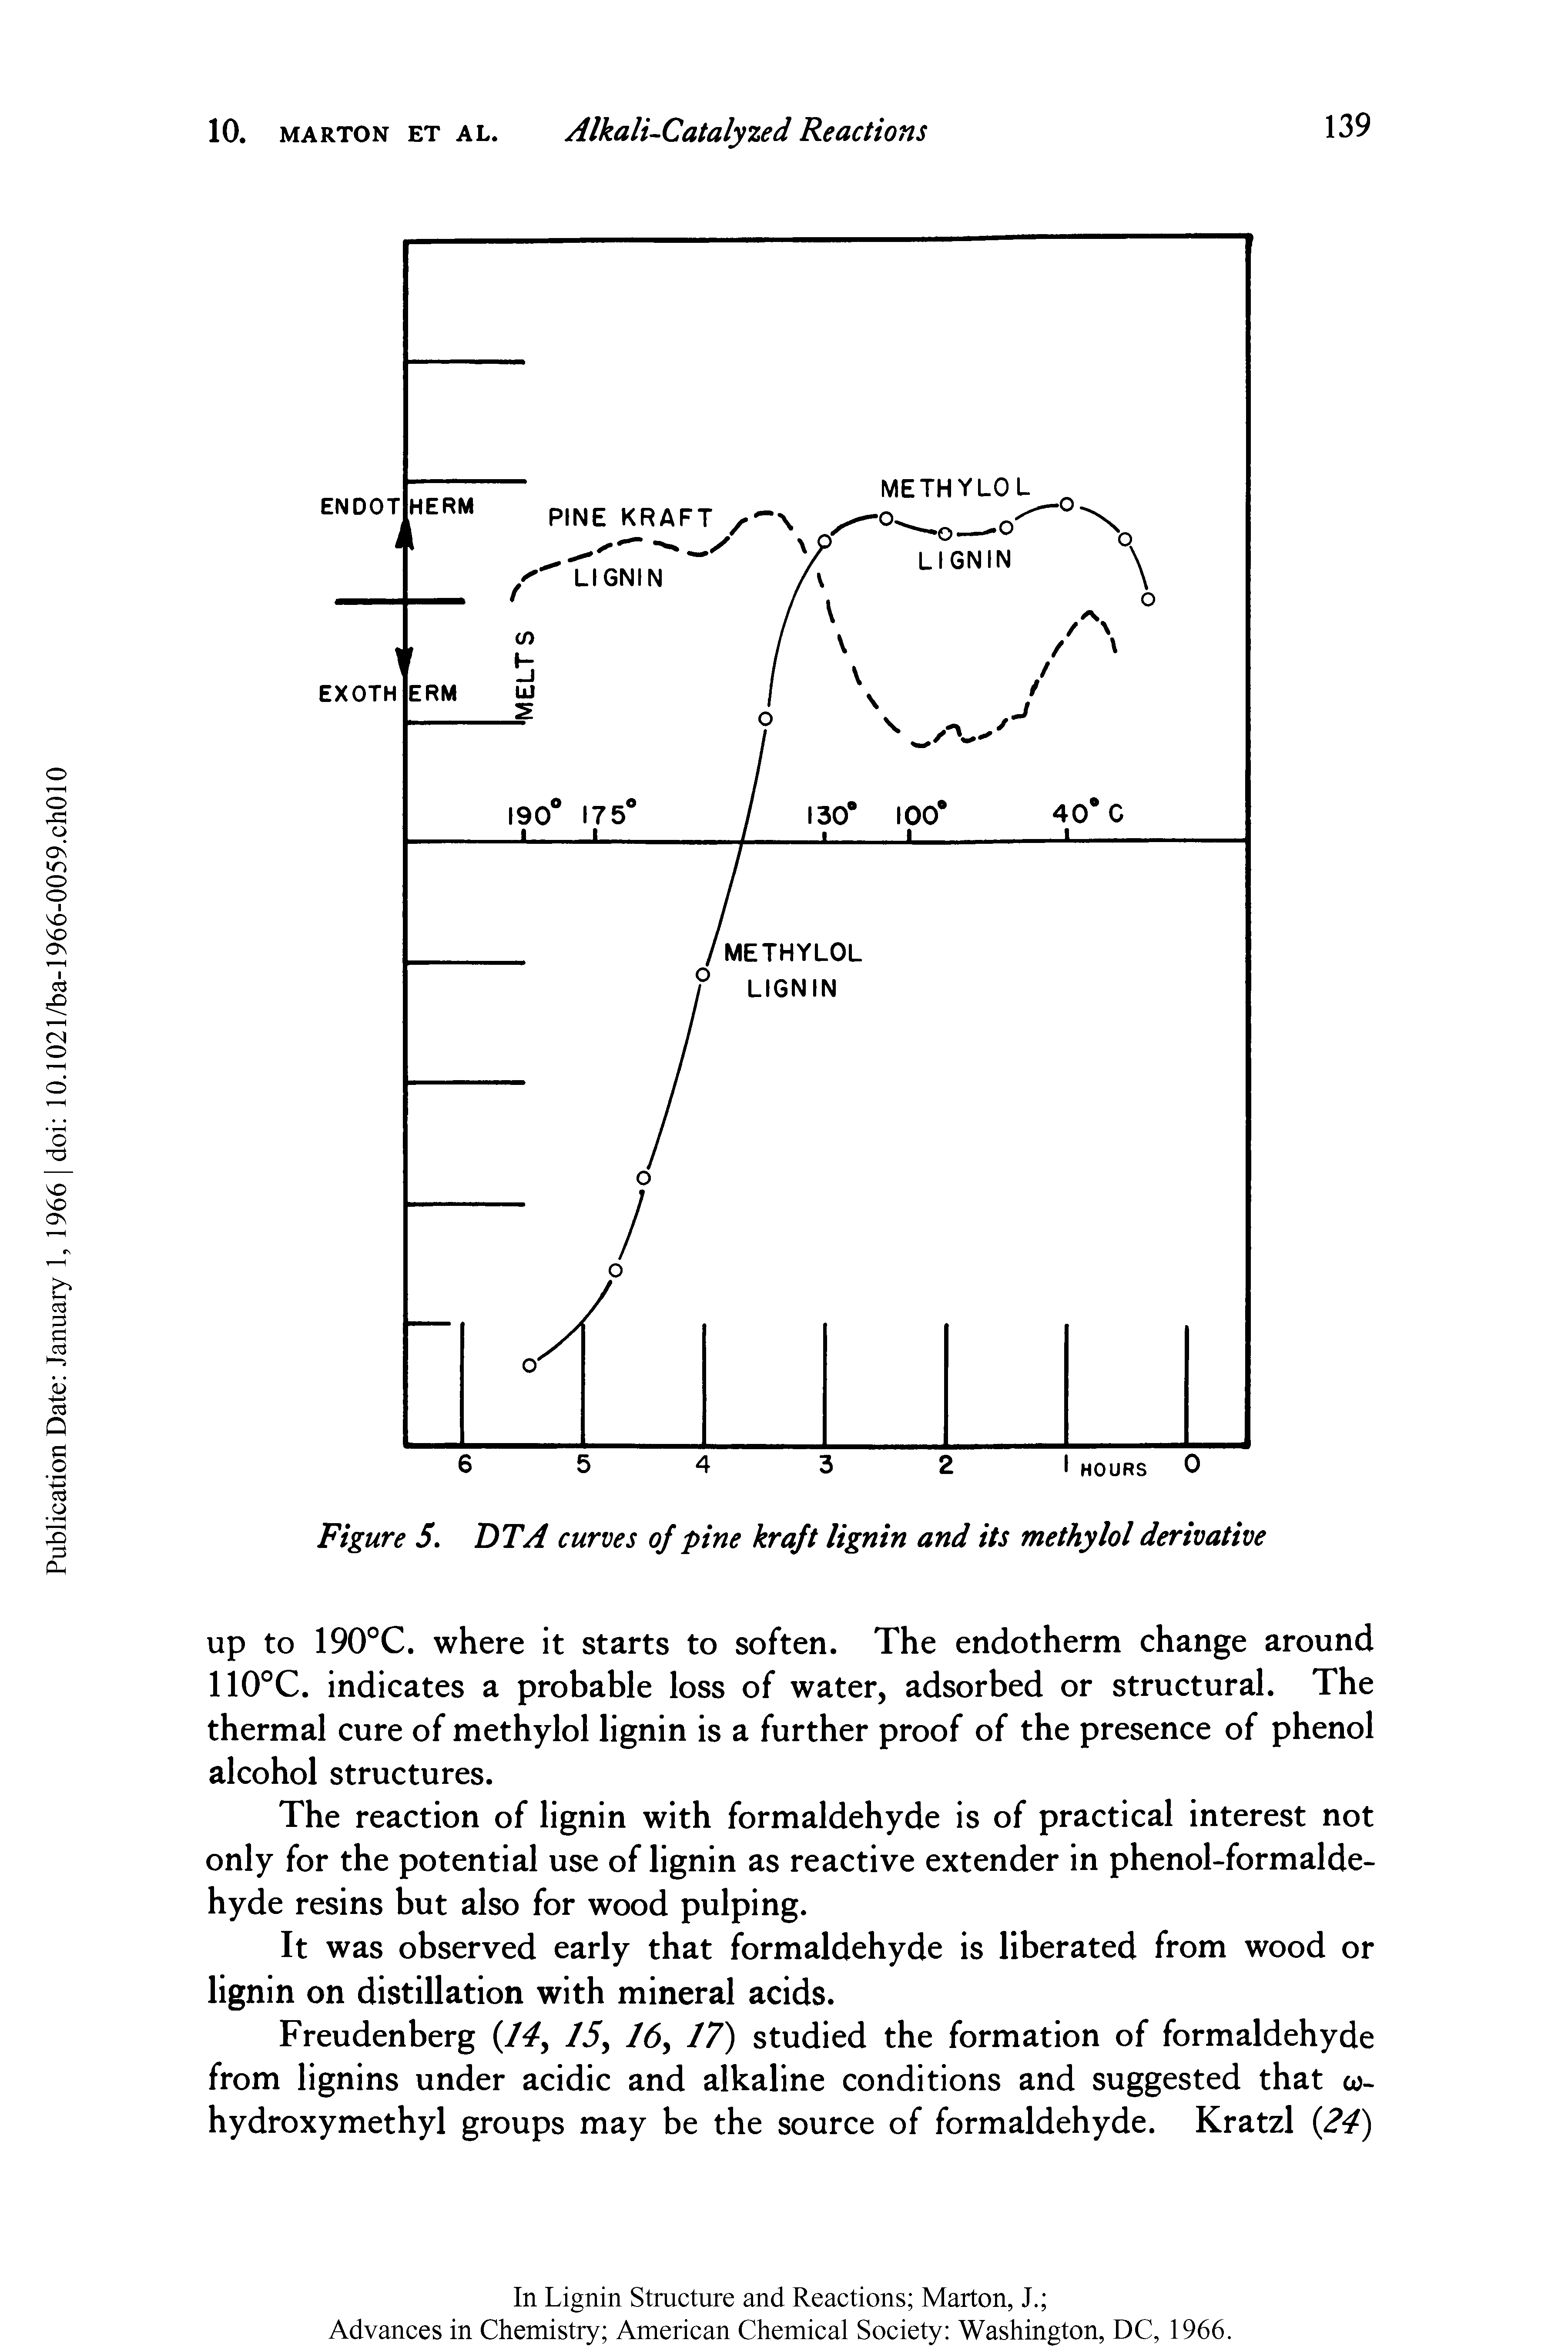 Figure 5. DTA curves of pine kraft lignin and its methylol derivative...